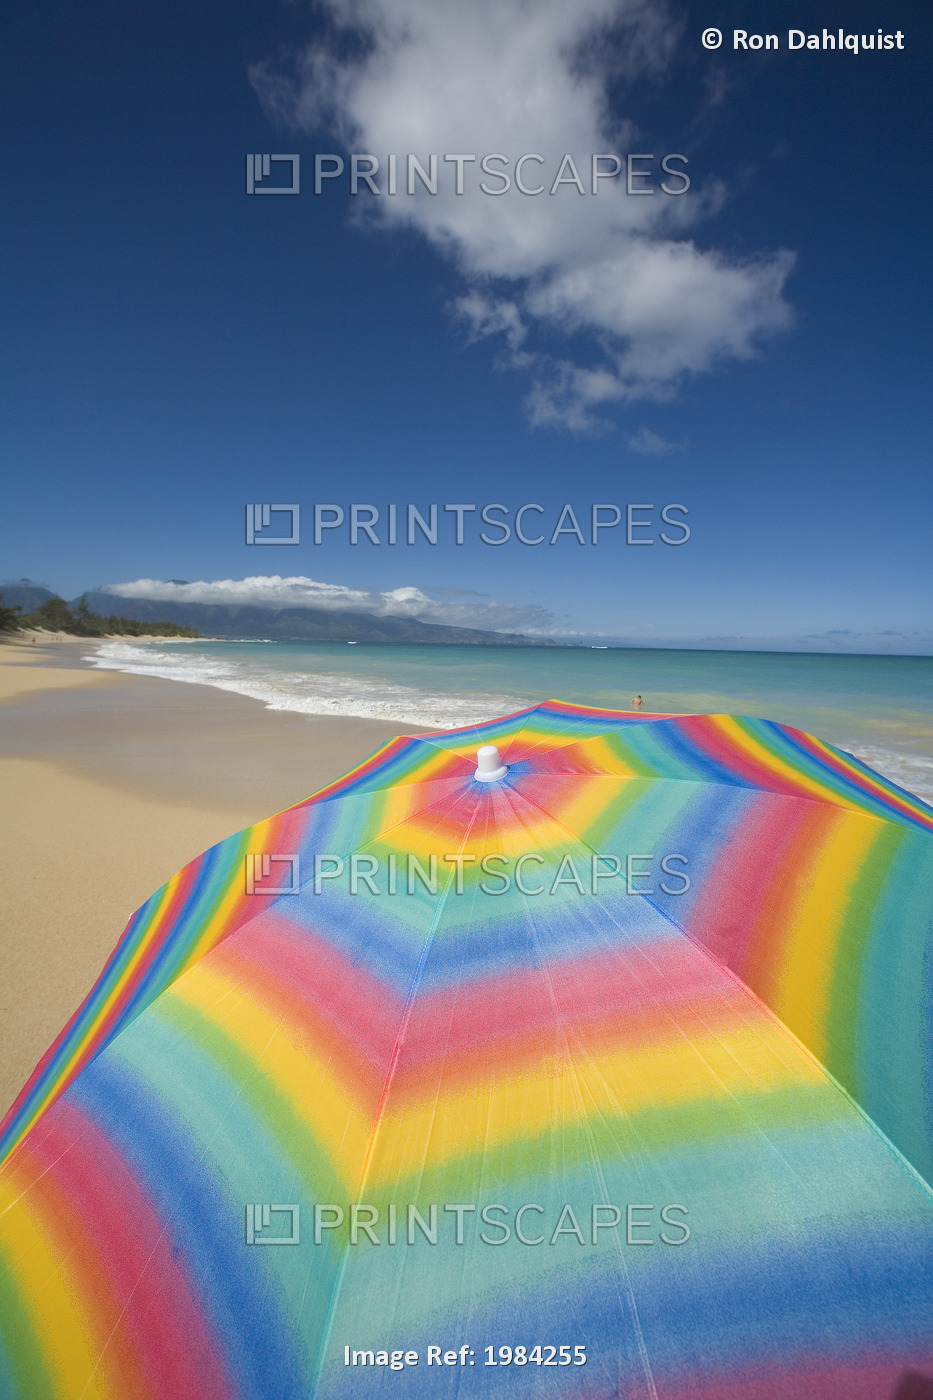 Brightly Colored Beach Umbrella On The Sand Near The Ocean.